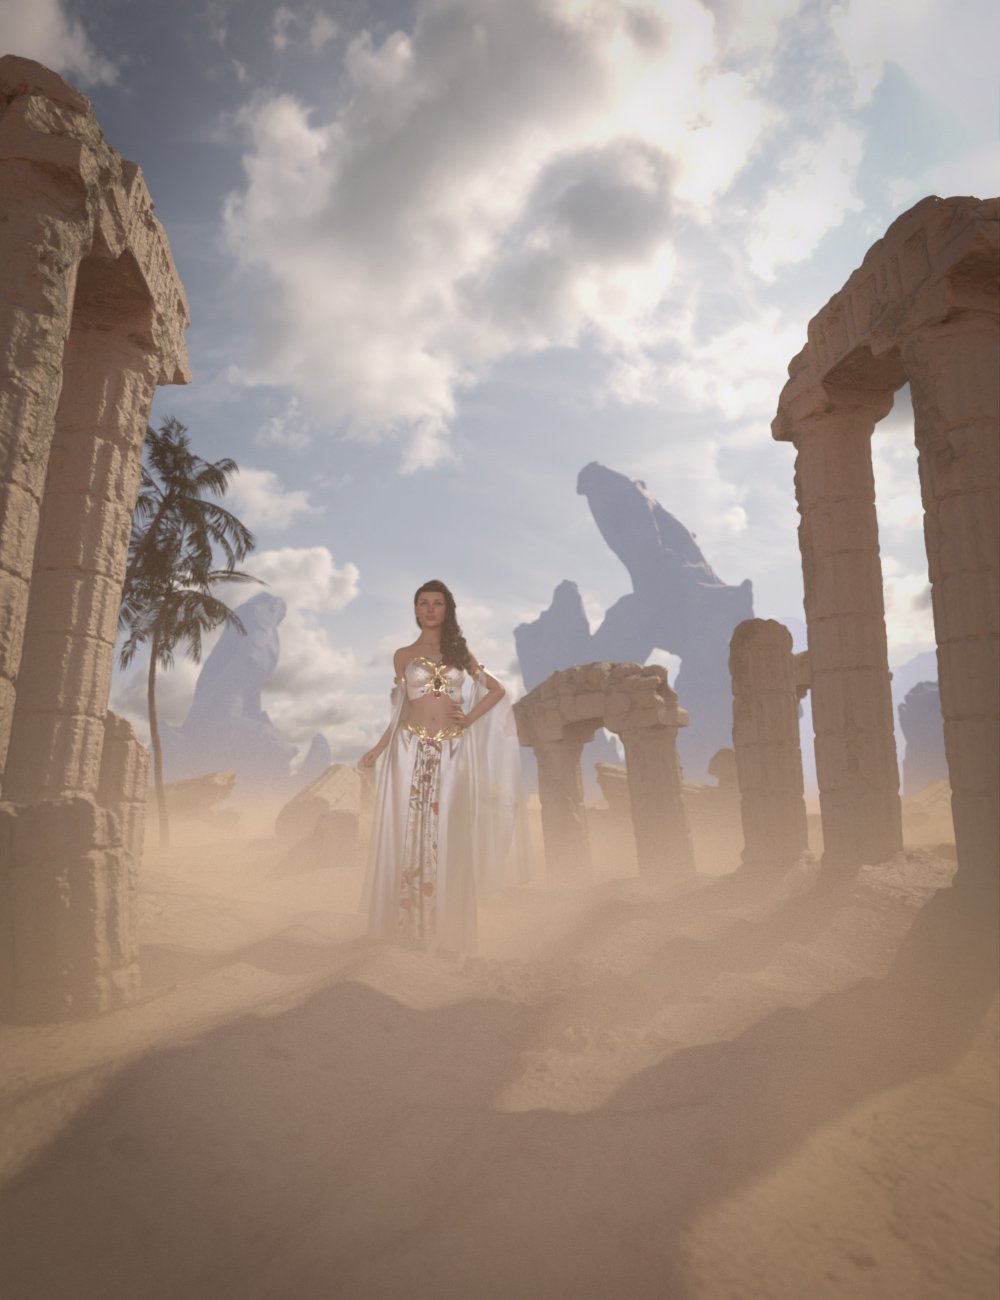 Desert Temple Ruins by: Dreamlight, 3D Models by Daz 3D